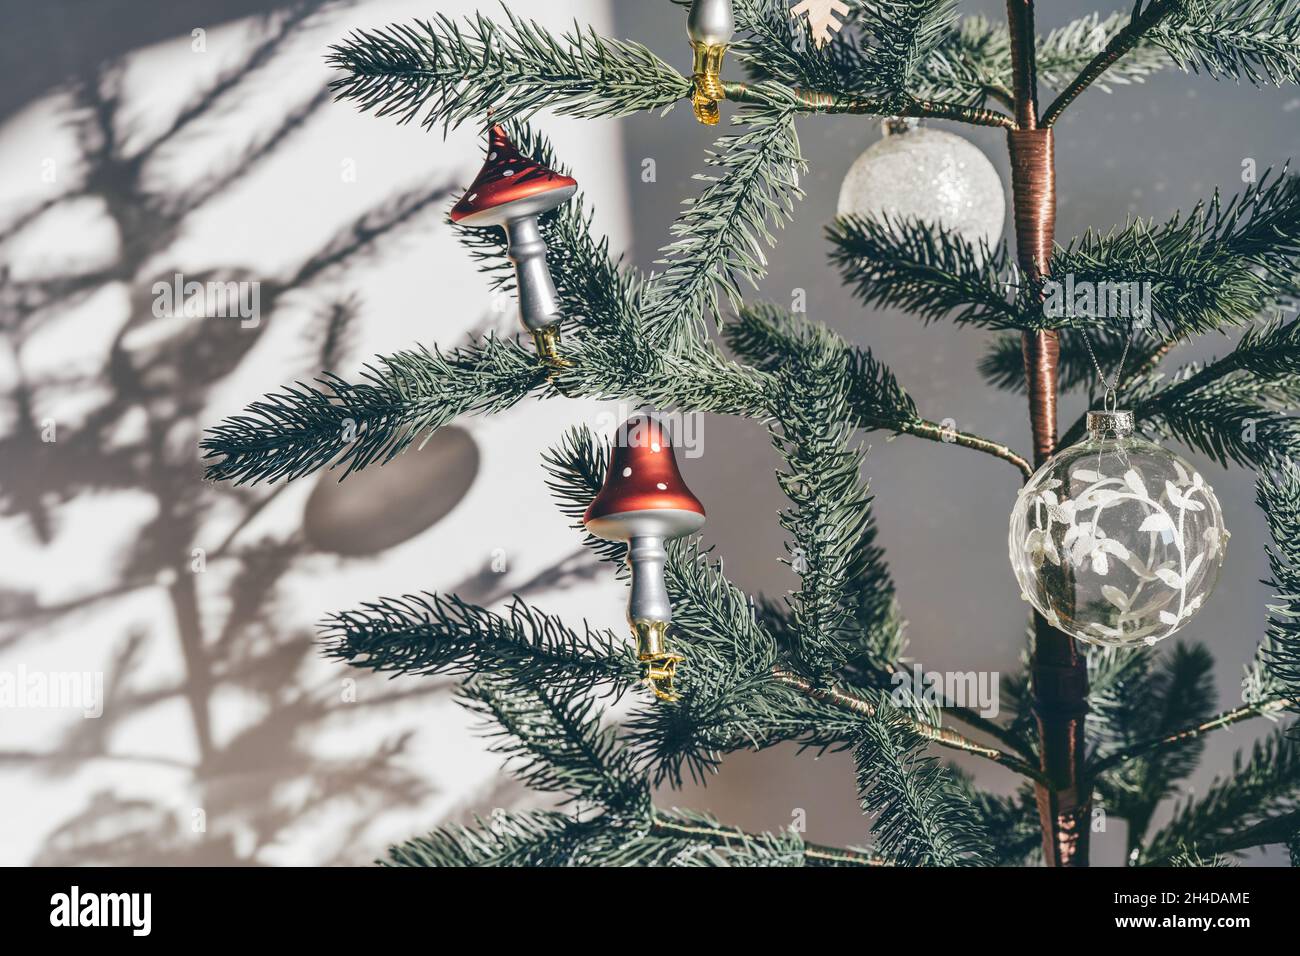 Reusable Christmas tree with glass mushrooms deco Stock Photo